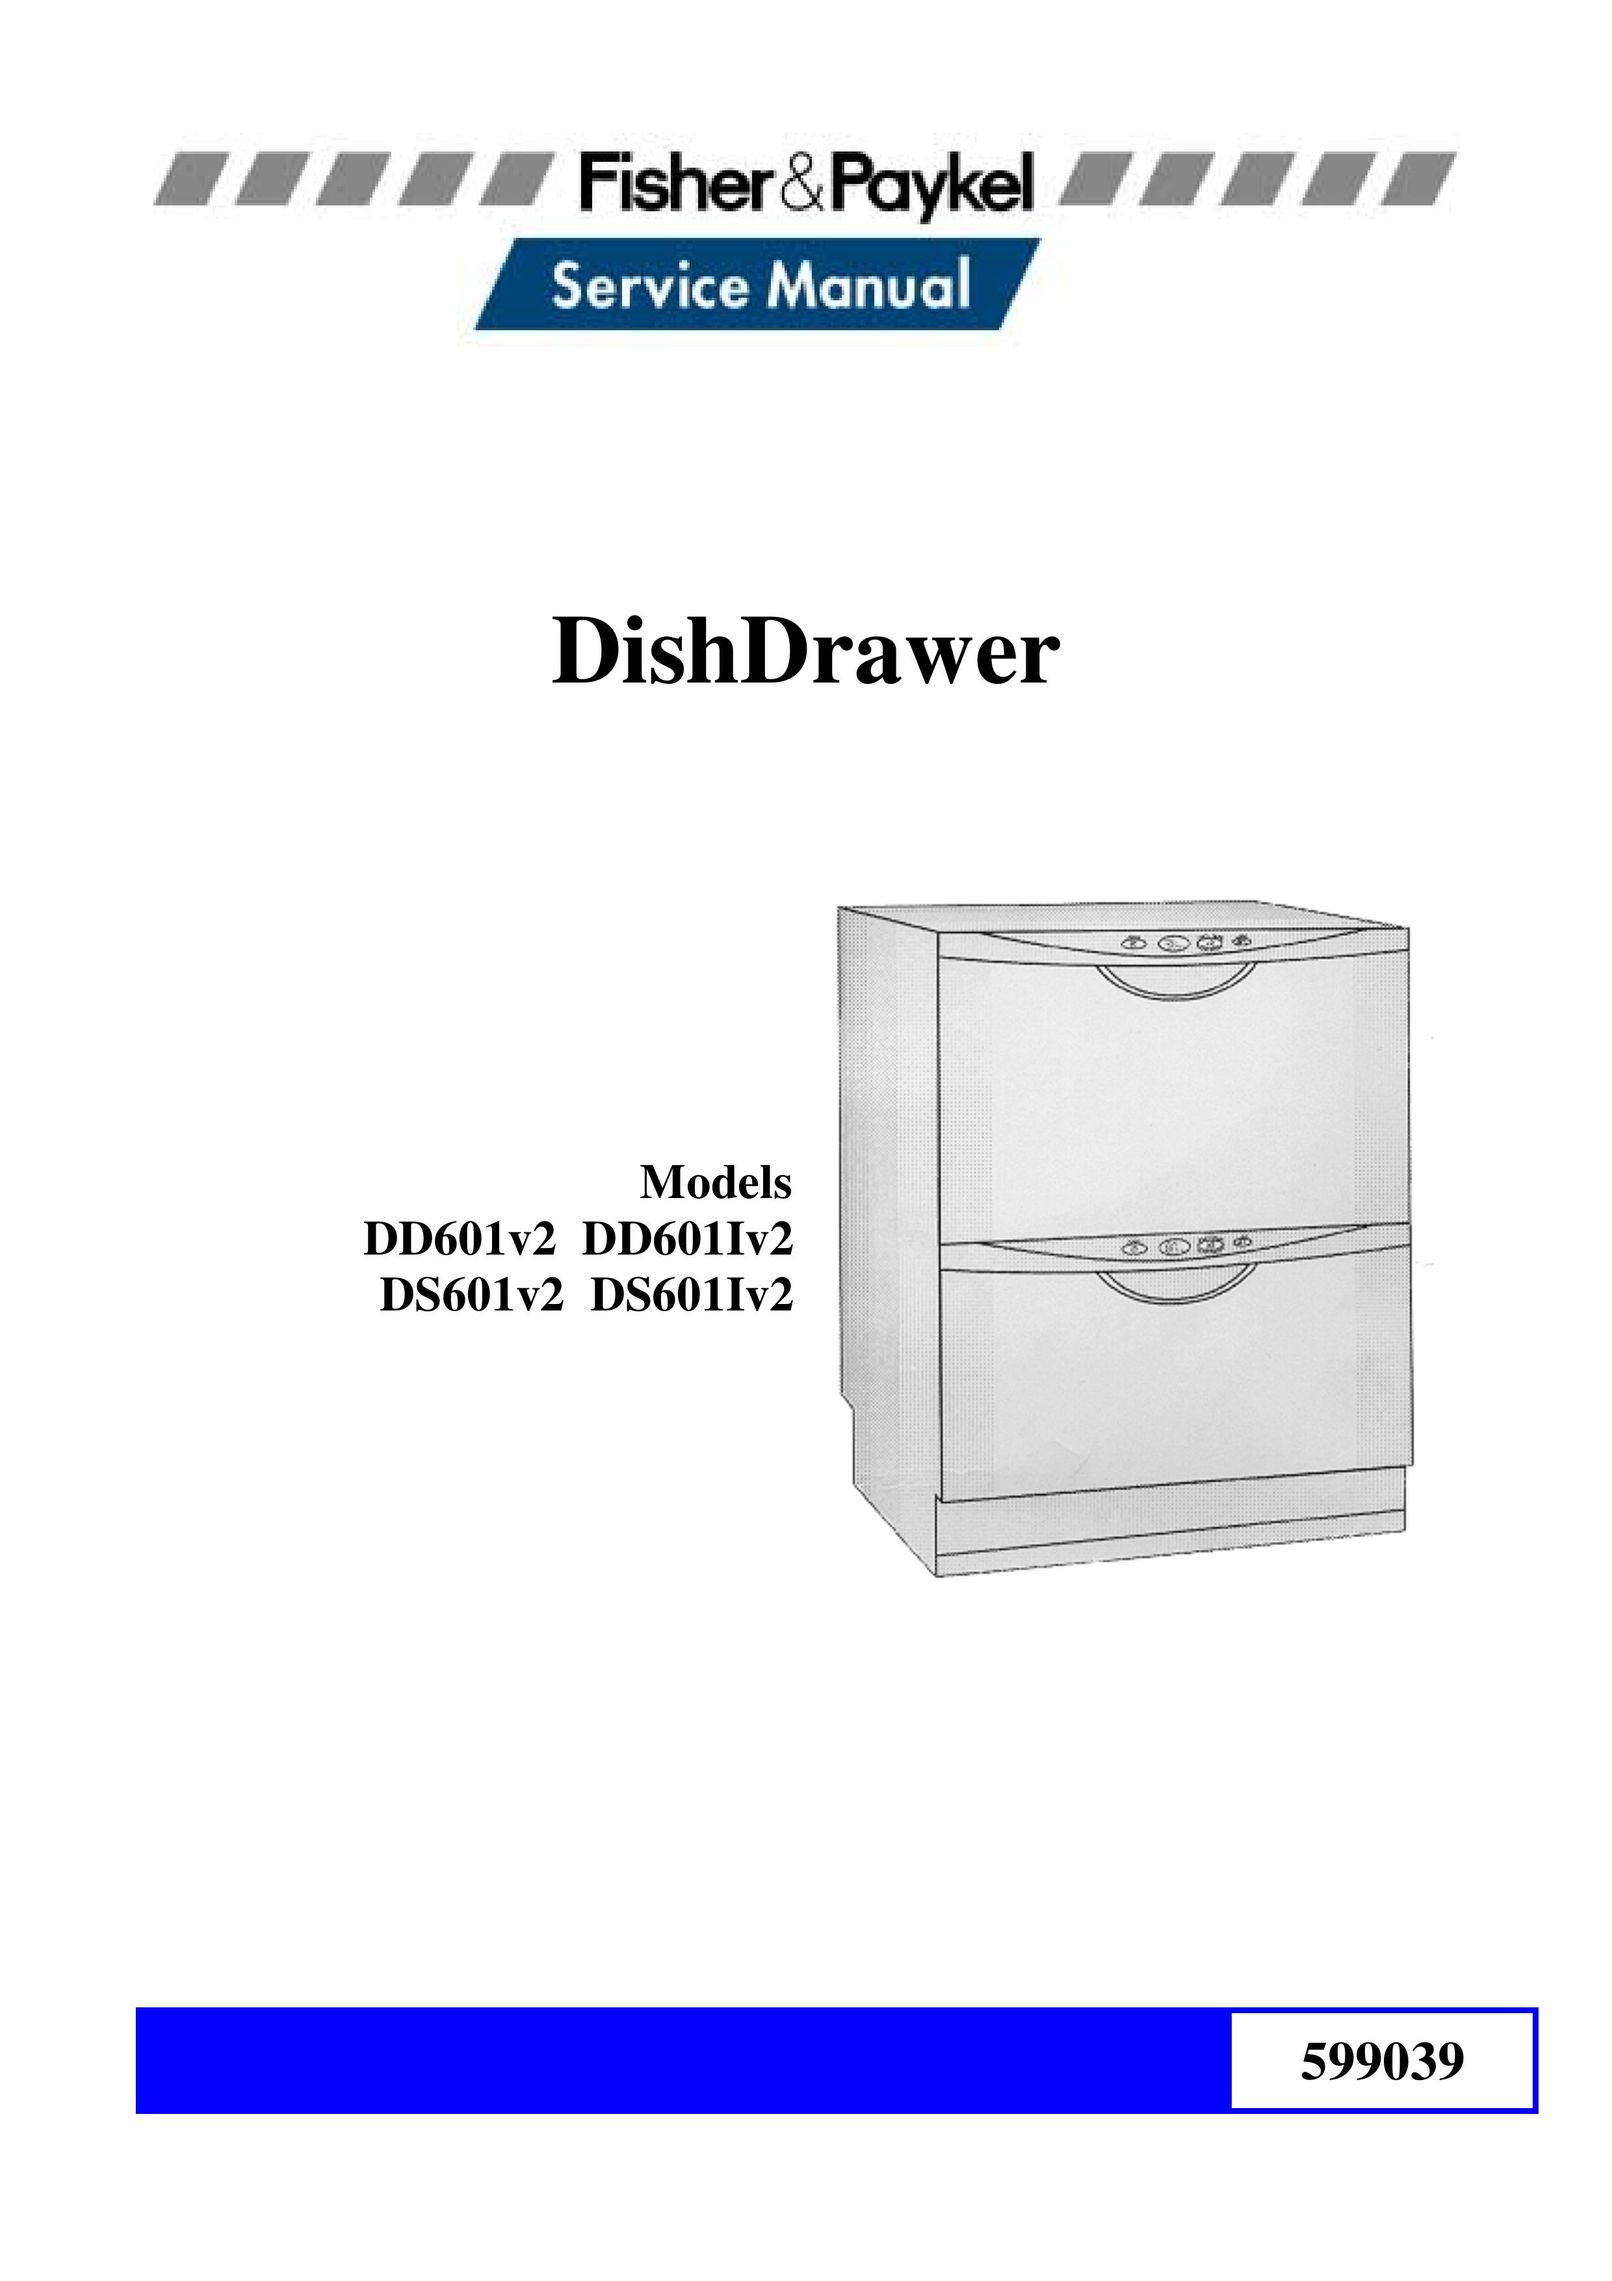 Fisher & Paykel DD601IV2 Dishwasher User Manual